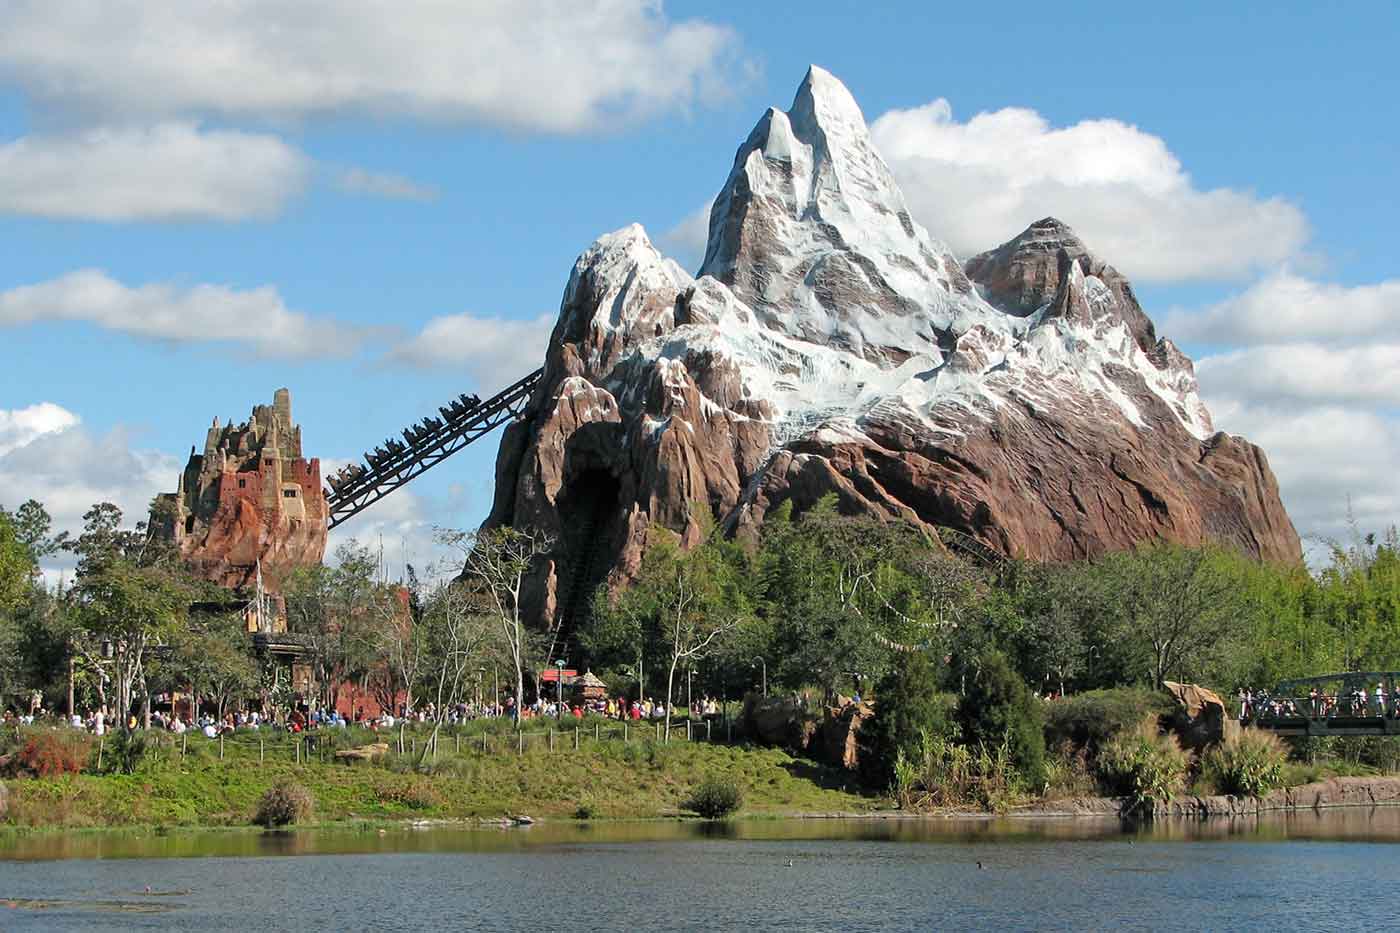 Disney’s Animal Kingdom Theme Park